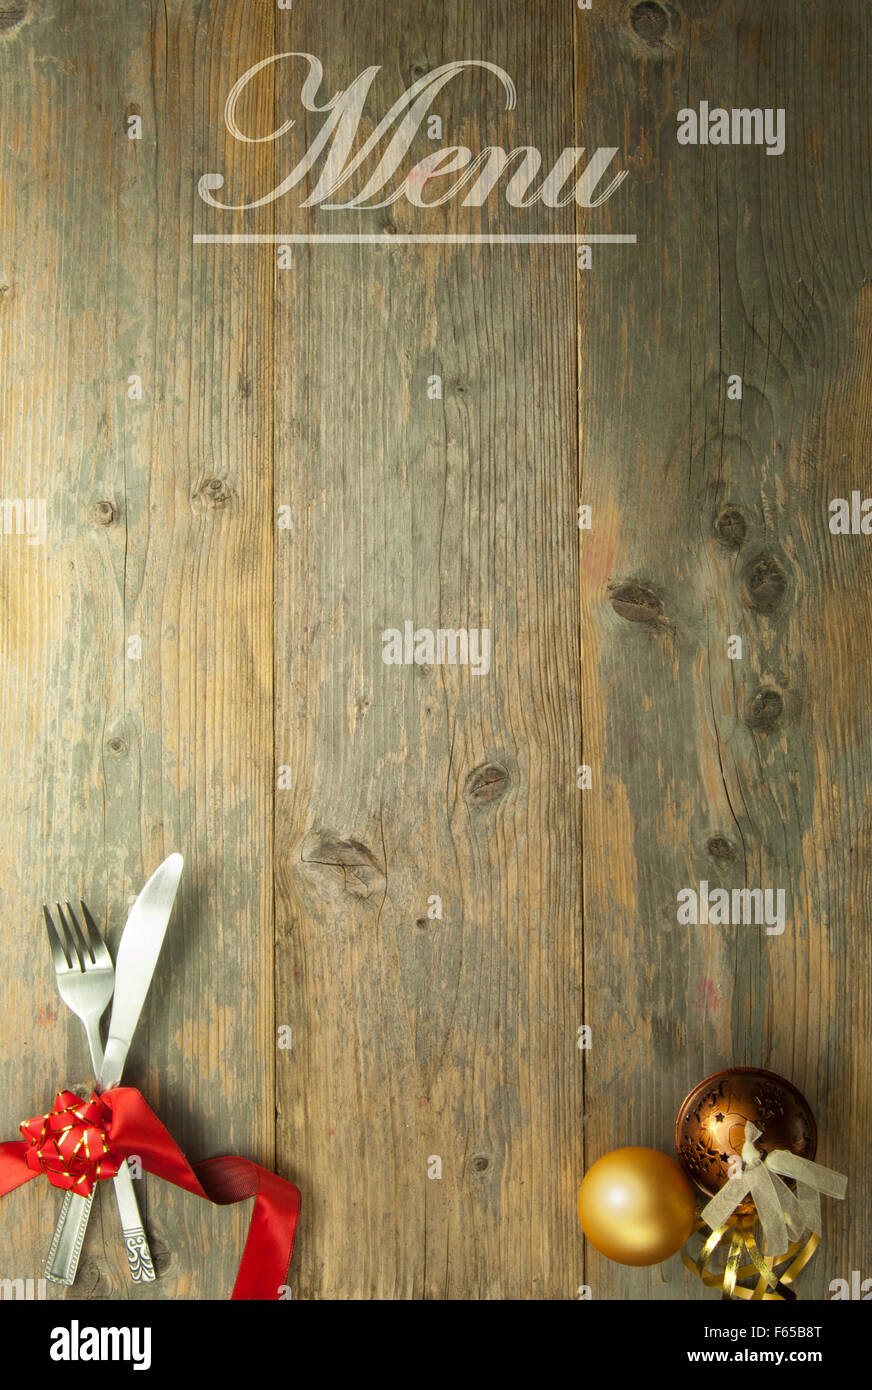 Christmas menu background Stock Photo